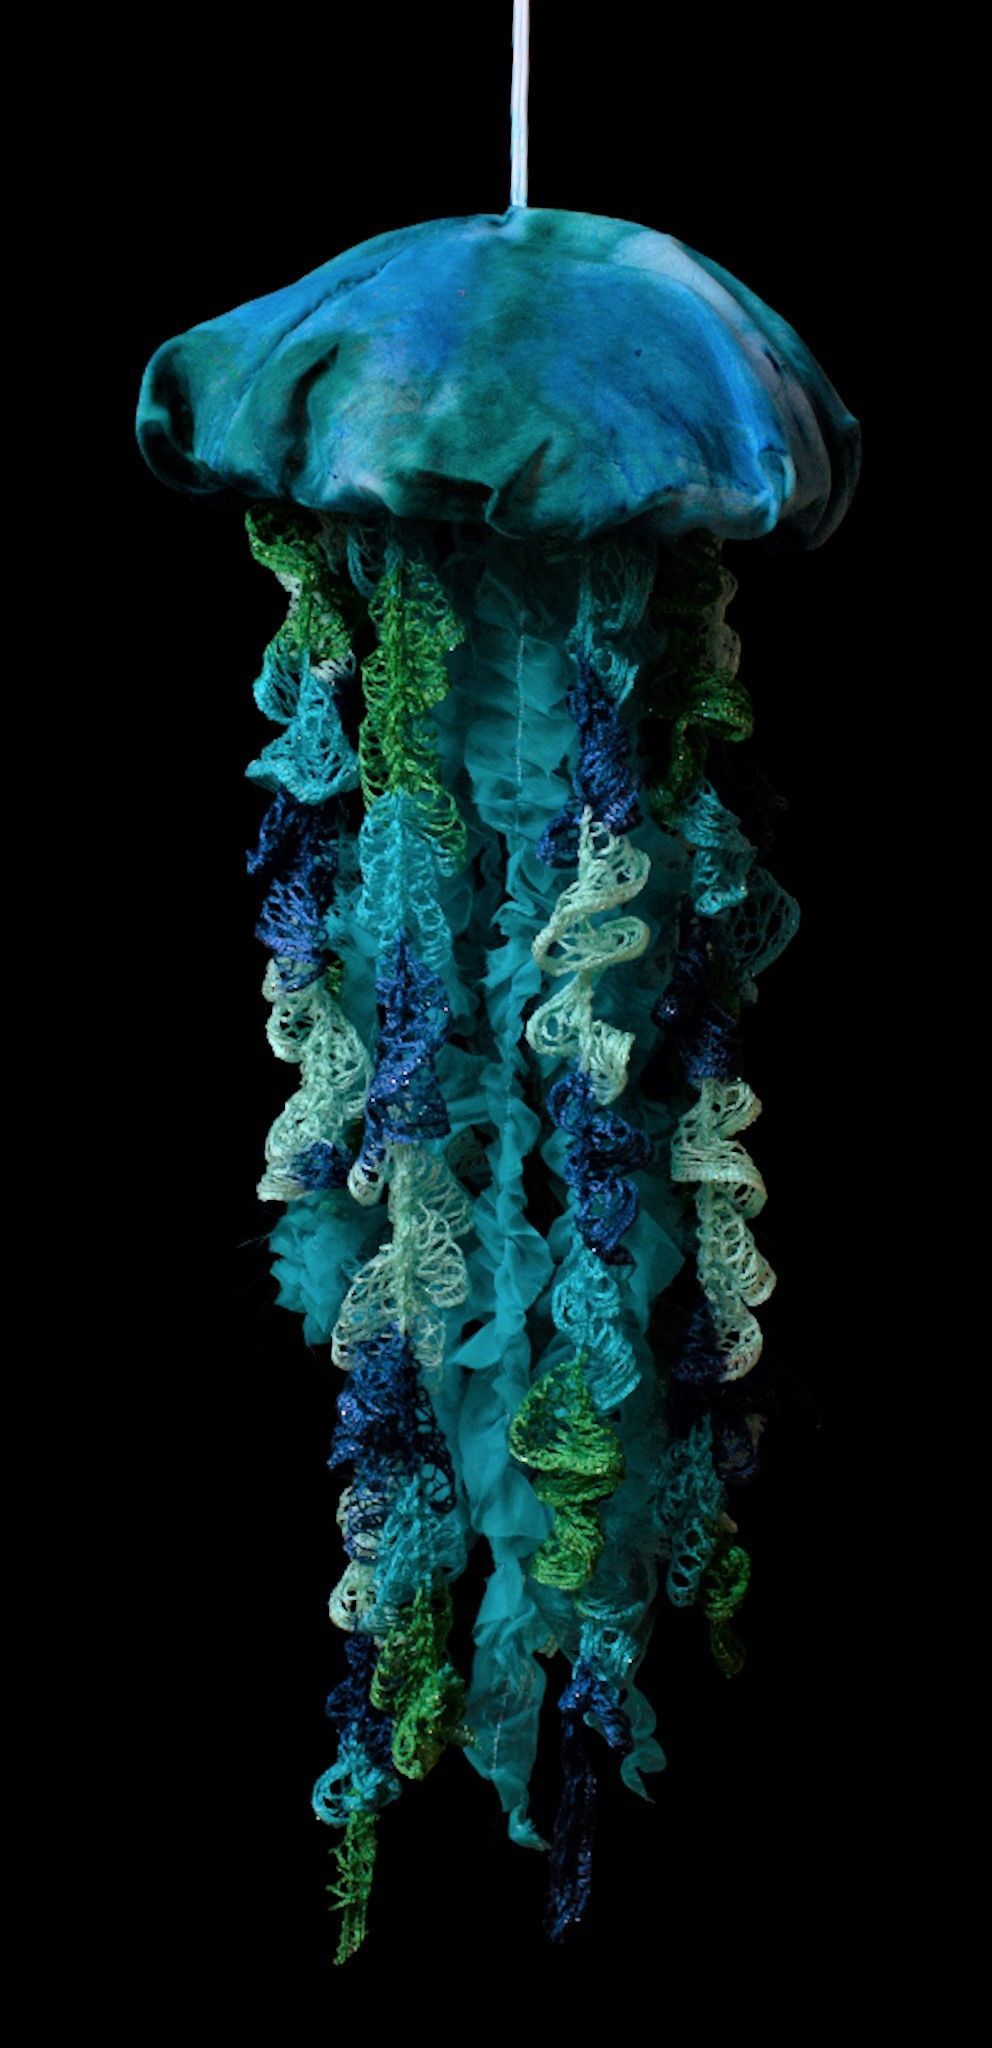 Sherry Henrickson - "Jellyfish Lamp #2"